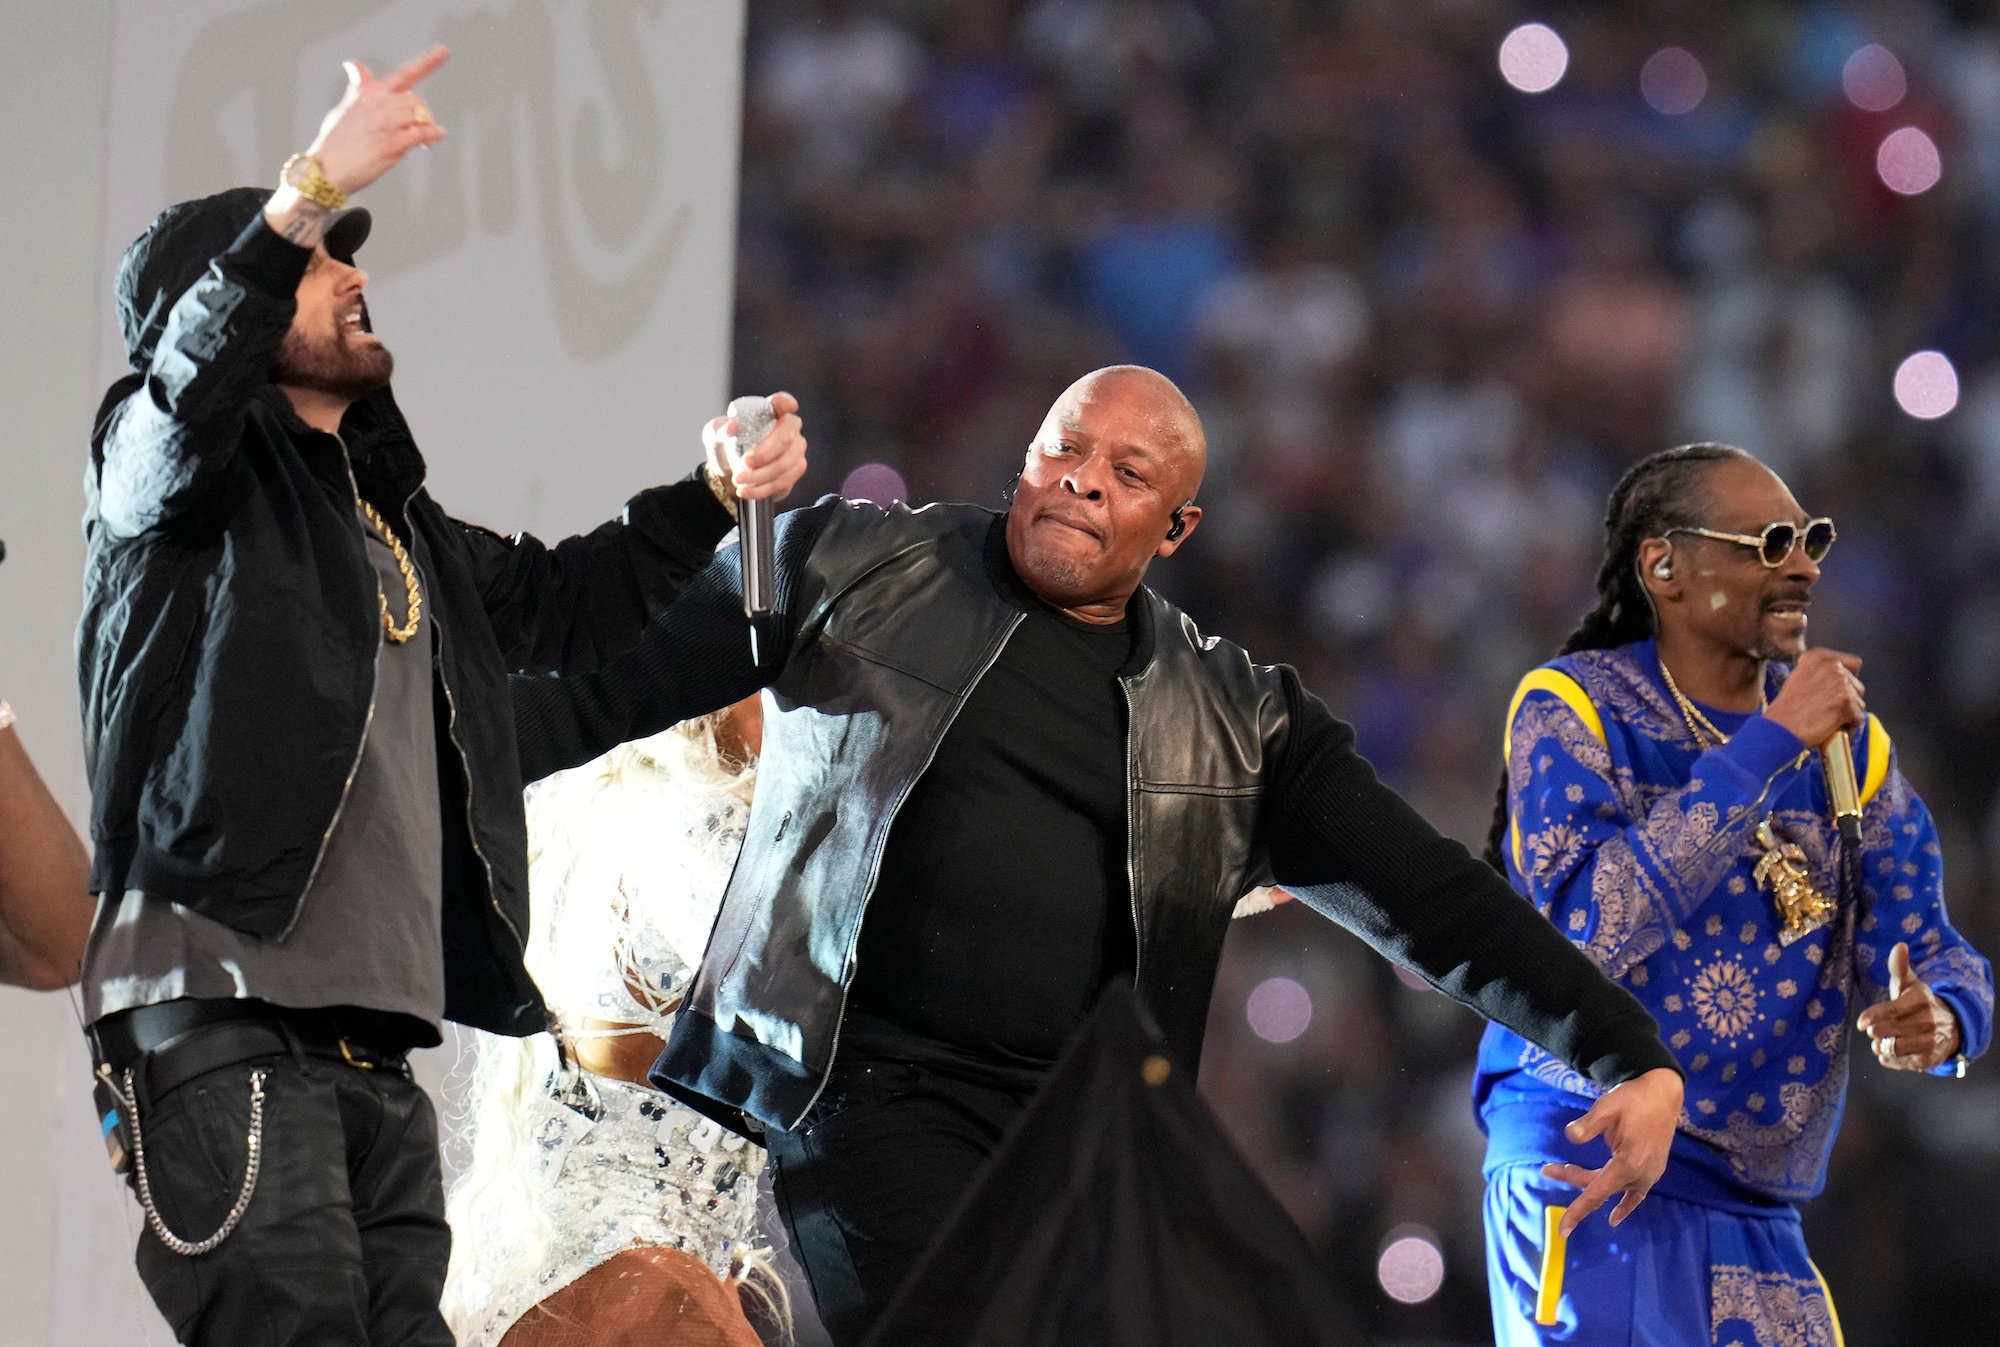 Eminem, Dr. Dre, and Snoop Dogg performing together at the 2022 Super Bowl halftime show